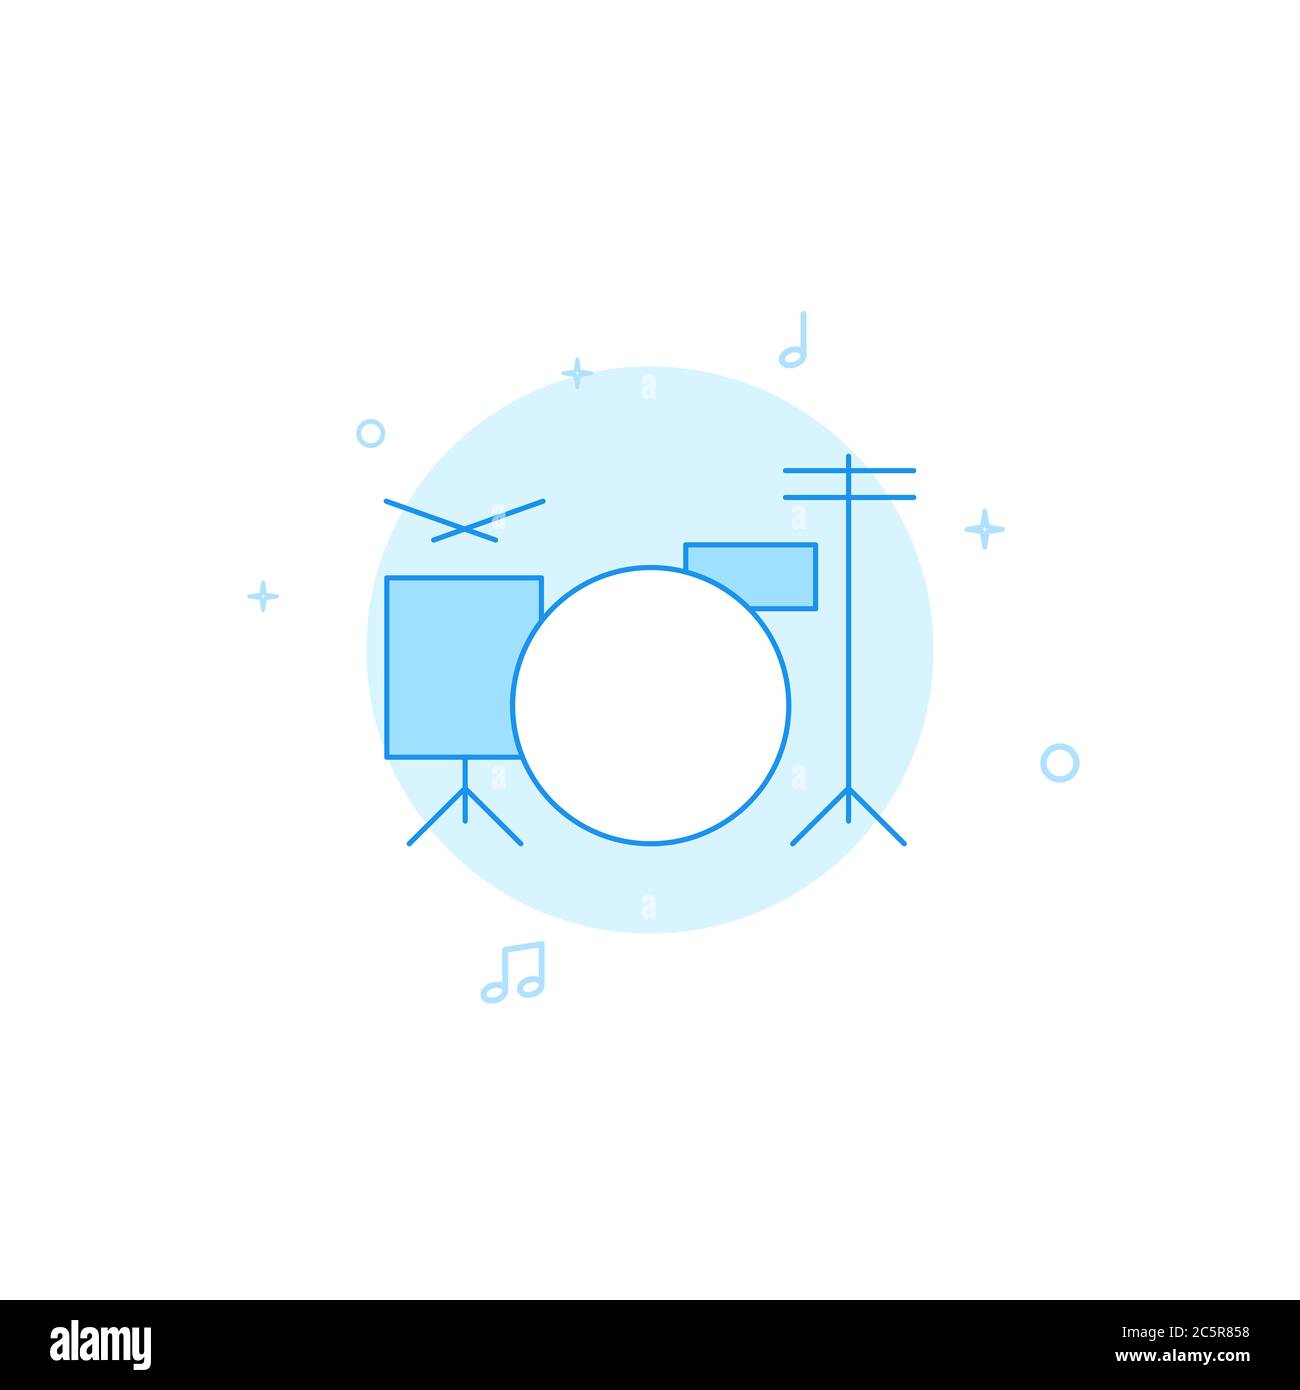 Drums, drum kit, drummer icon. Flat illustration. Filled line style. Blue monochrome design. Stock Photo